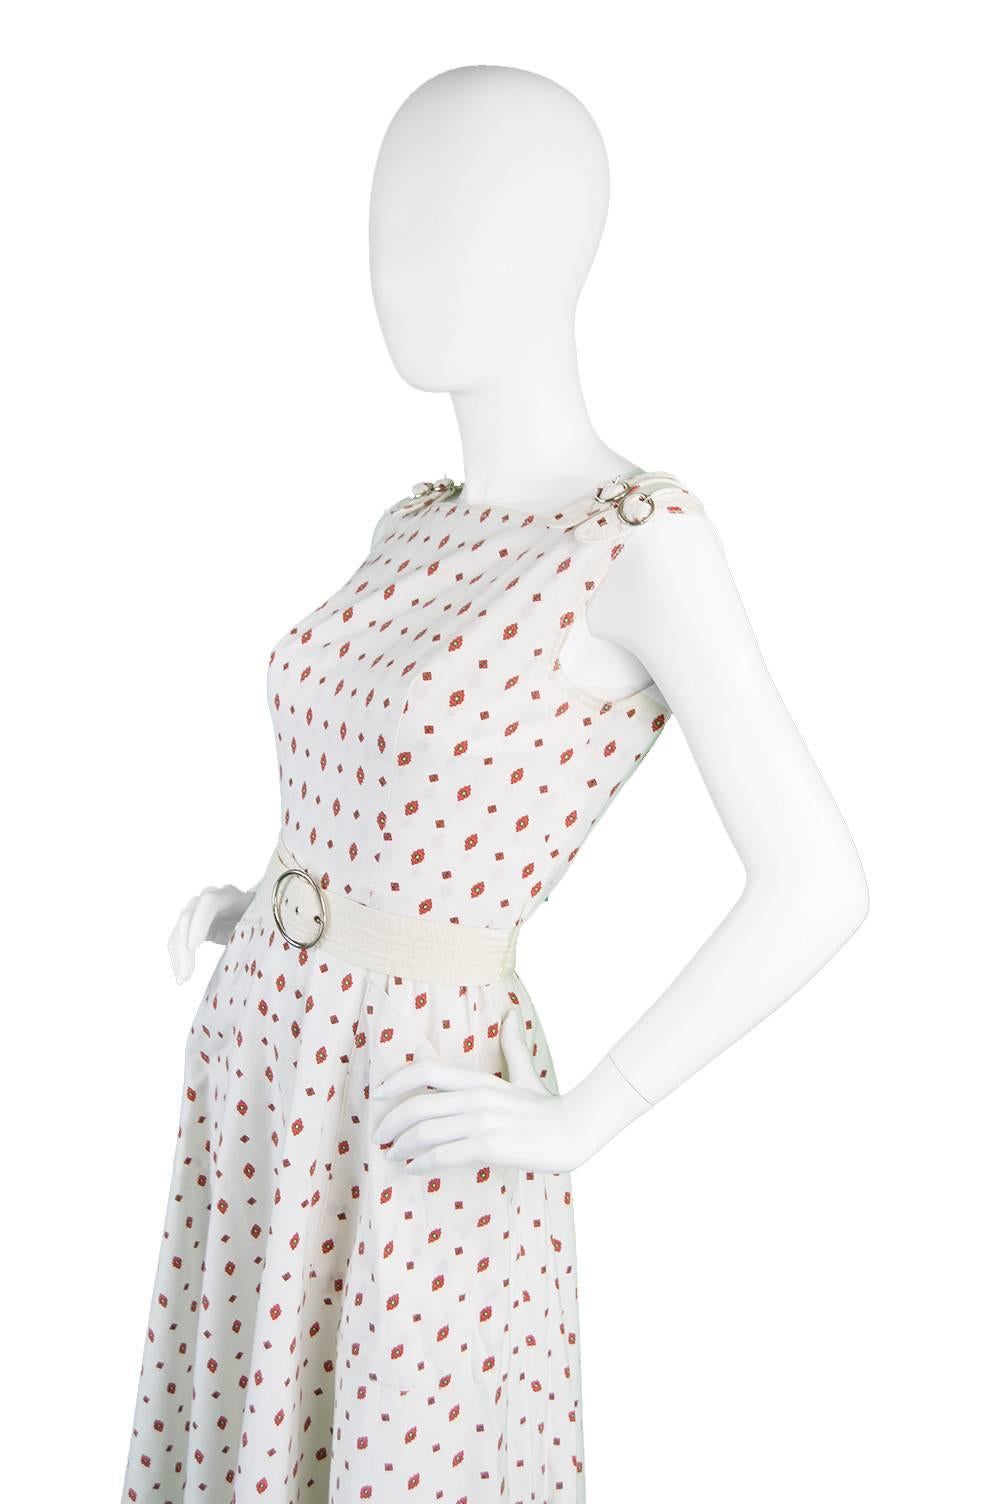 Women's Vintage 1960s Louis Feraud White Cotton Space Age Mod Dress